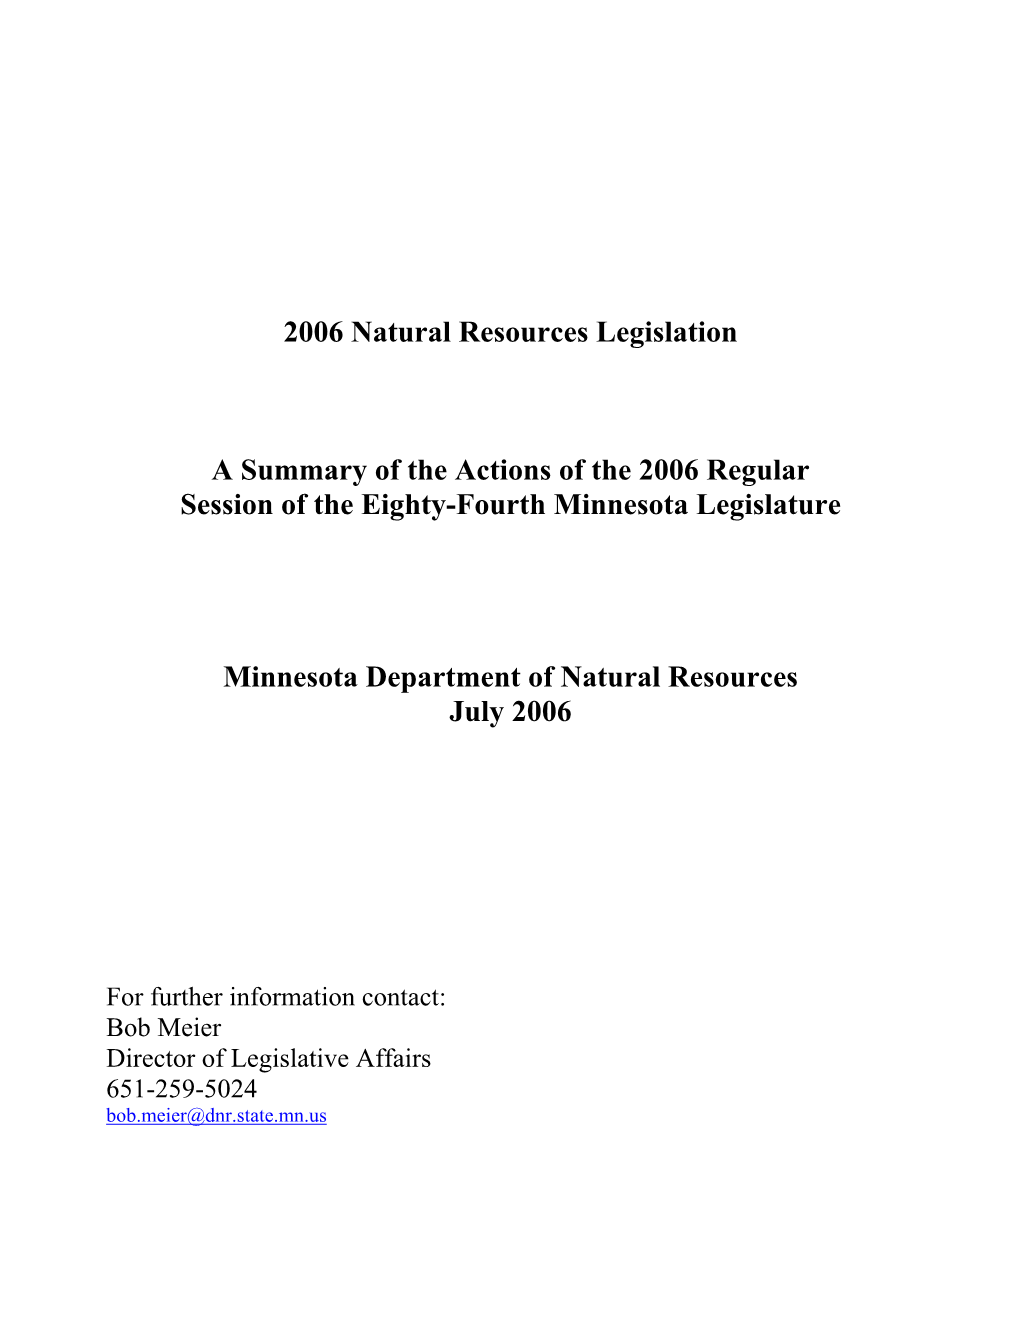 2006 Regular Session of the Eighty-Fourth Minnesota Legislature